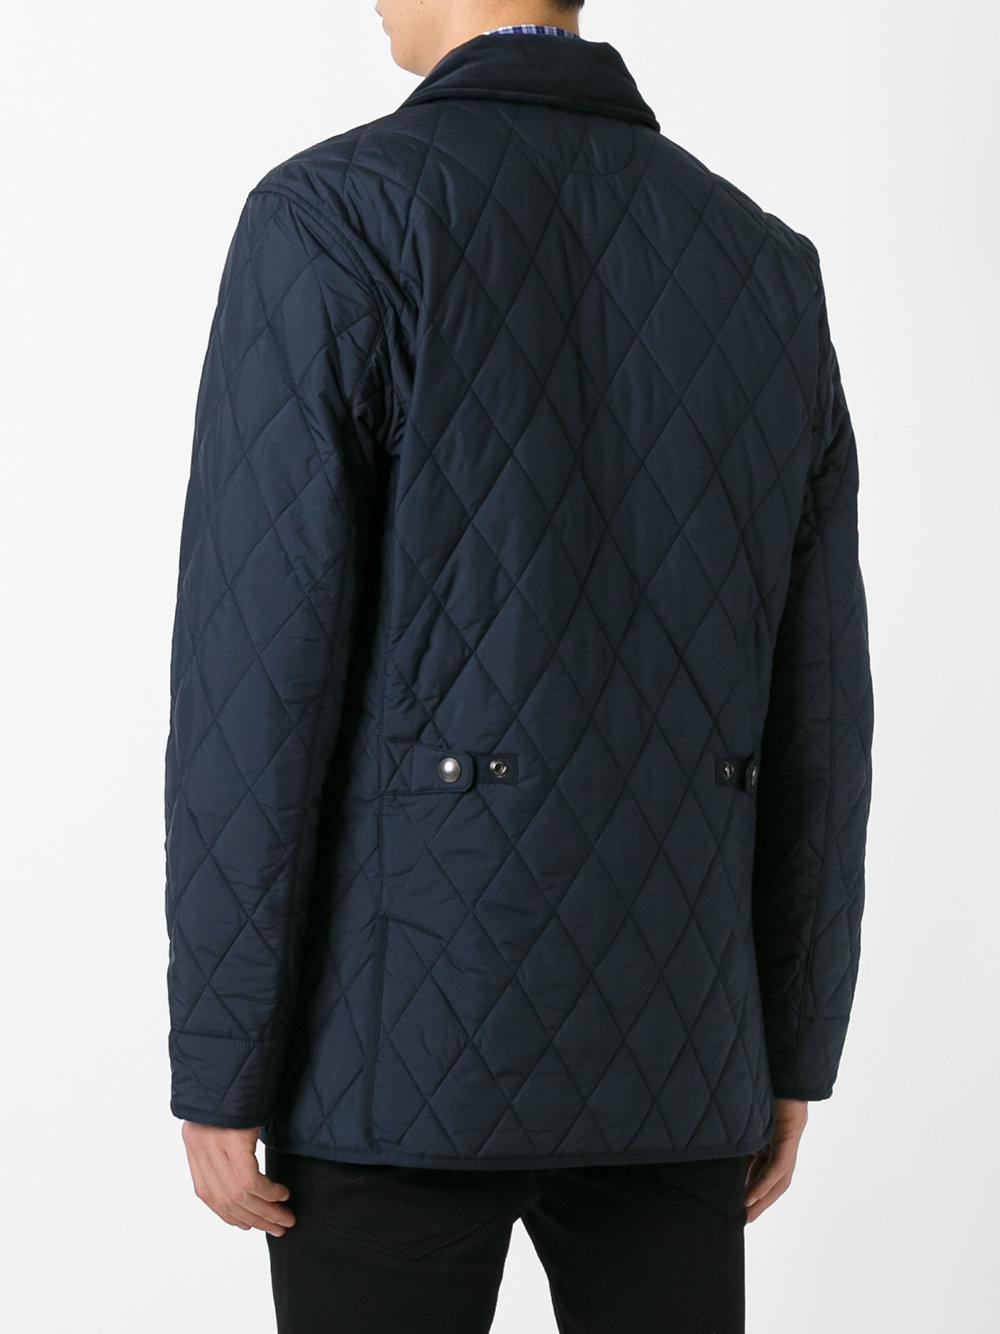 Lyst - Ralph Lauren Diamond-quilted Jacket in Blue for Men